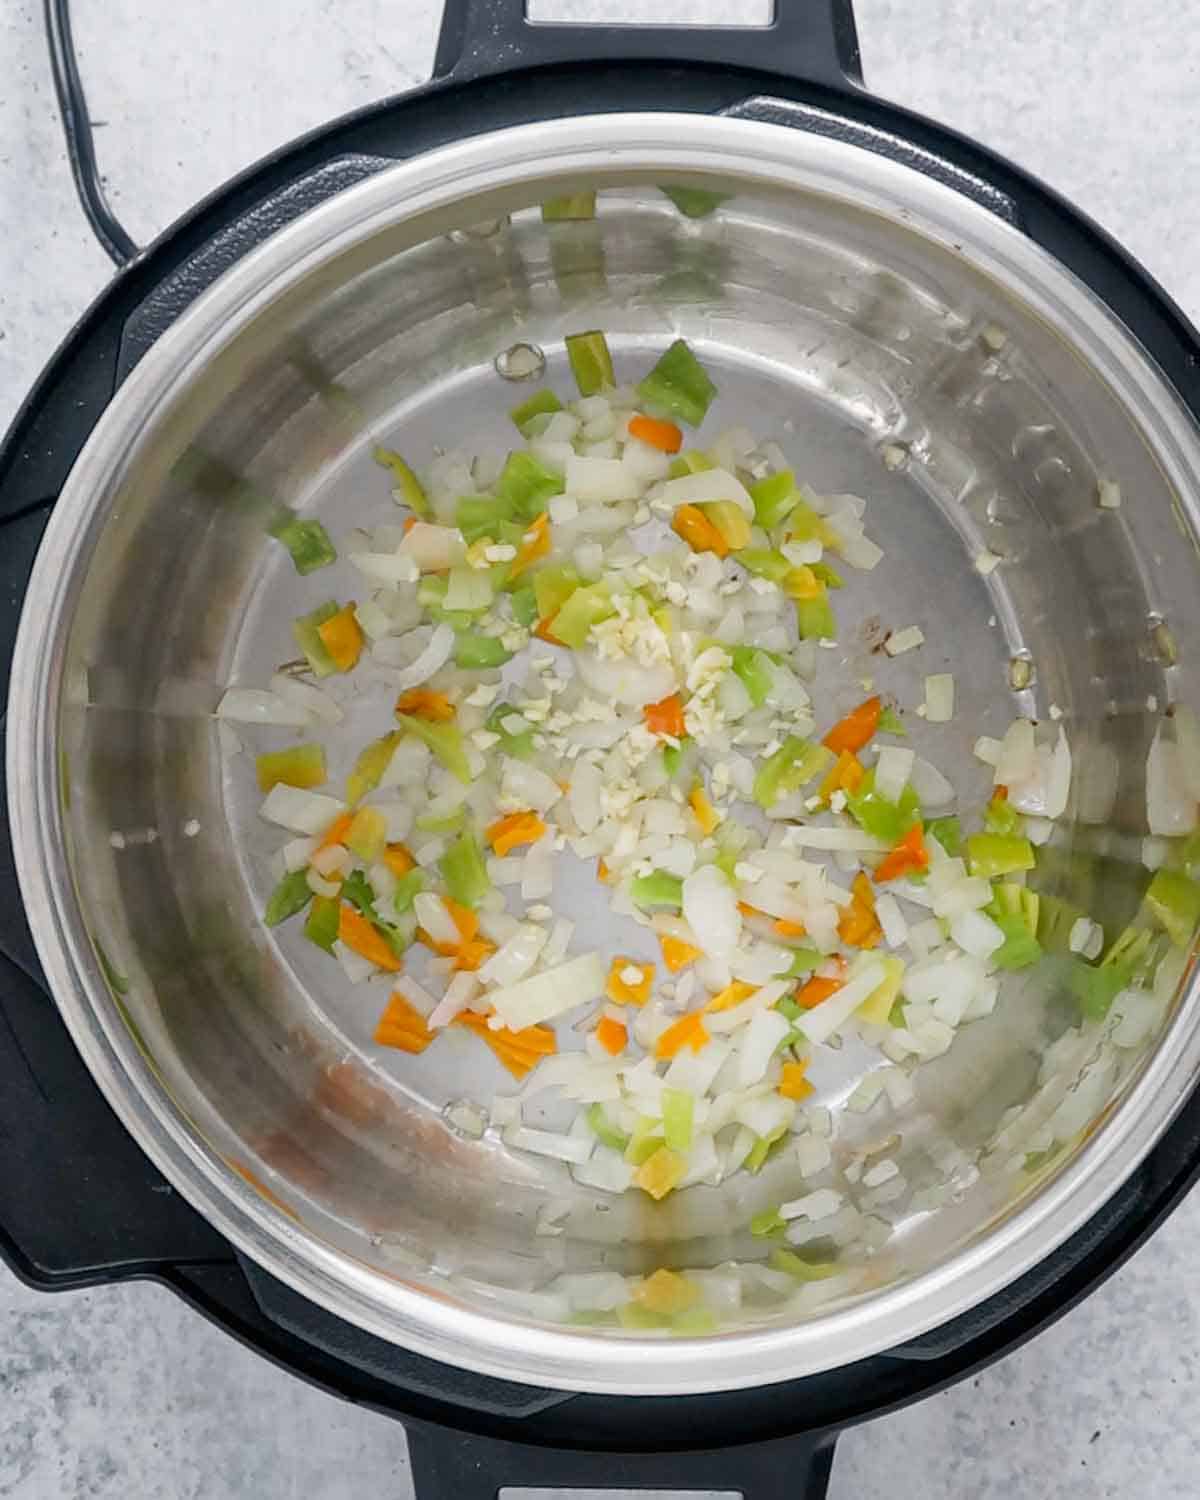 Sautéed veggies inside and Instant pot.